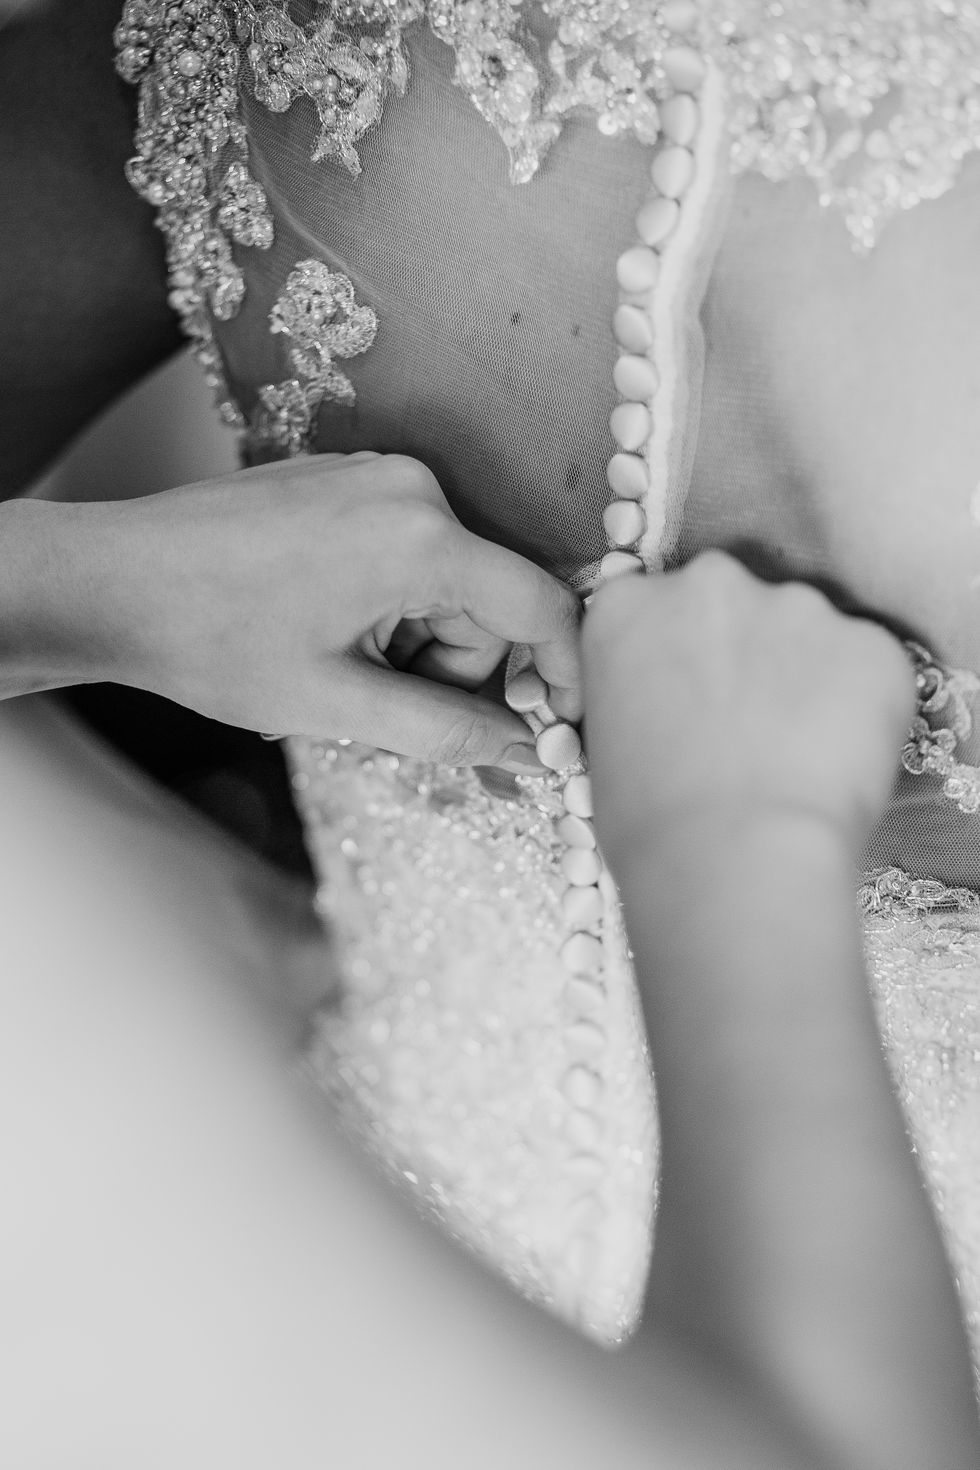 Photograph, White, Wedding dress, Hand, Dress, Black-and-white, Bride, Monochrome photography, Bridal clothing, Leg, 